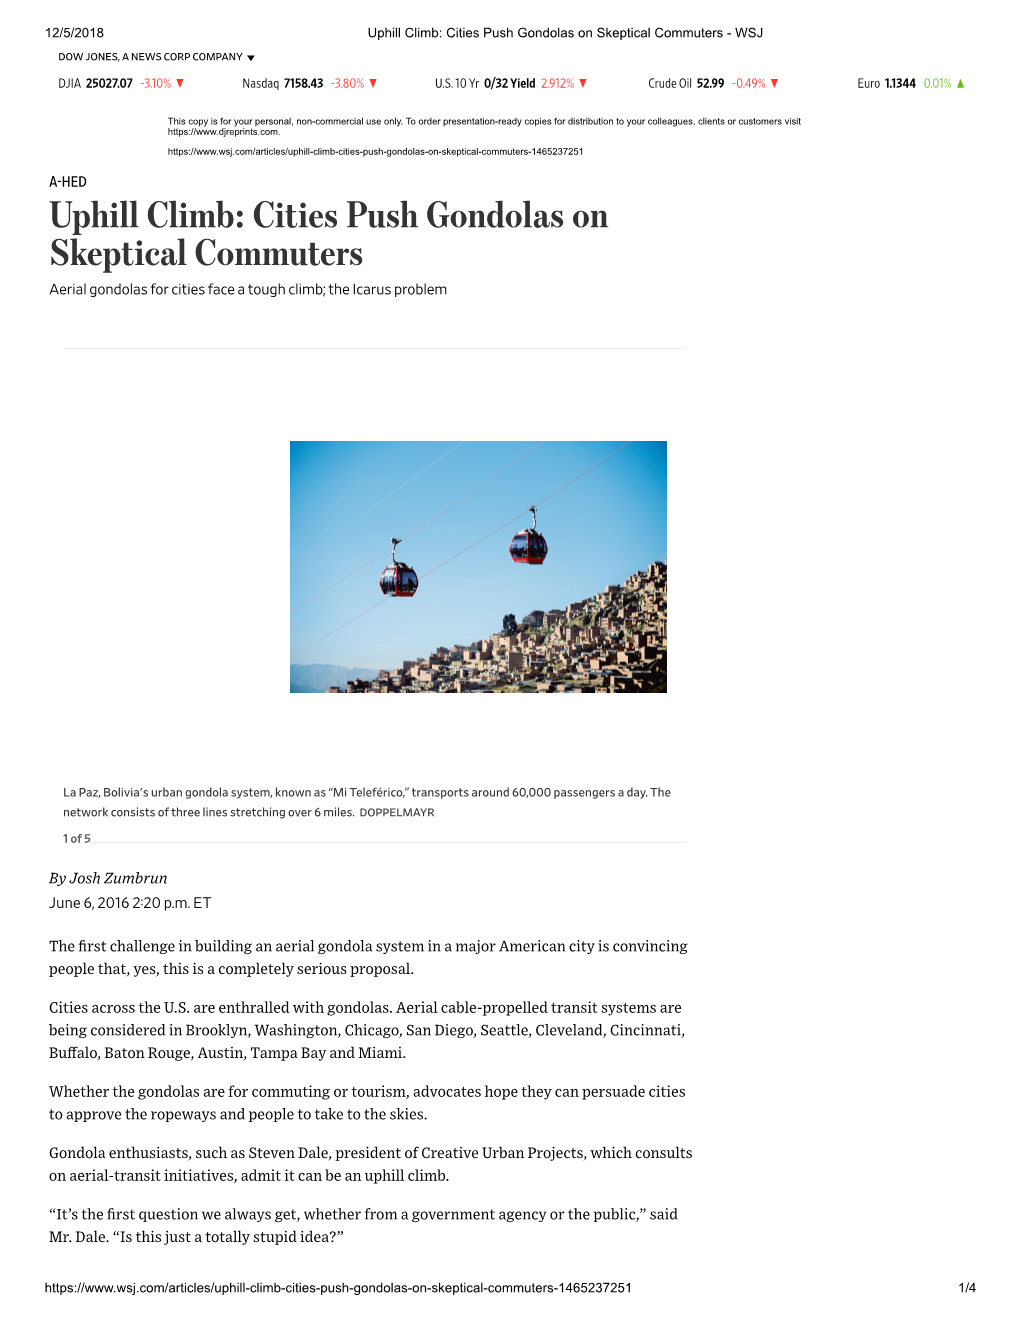 Uphill Climb: Cities Push Gondolas on Skeptical Commuters - WSJ